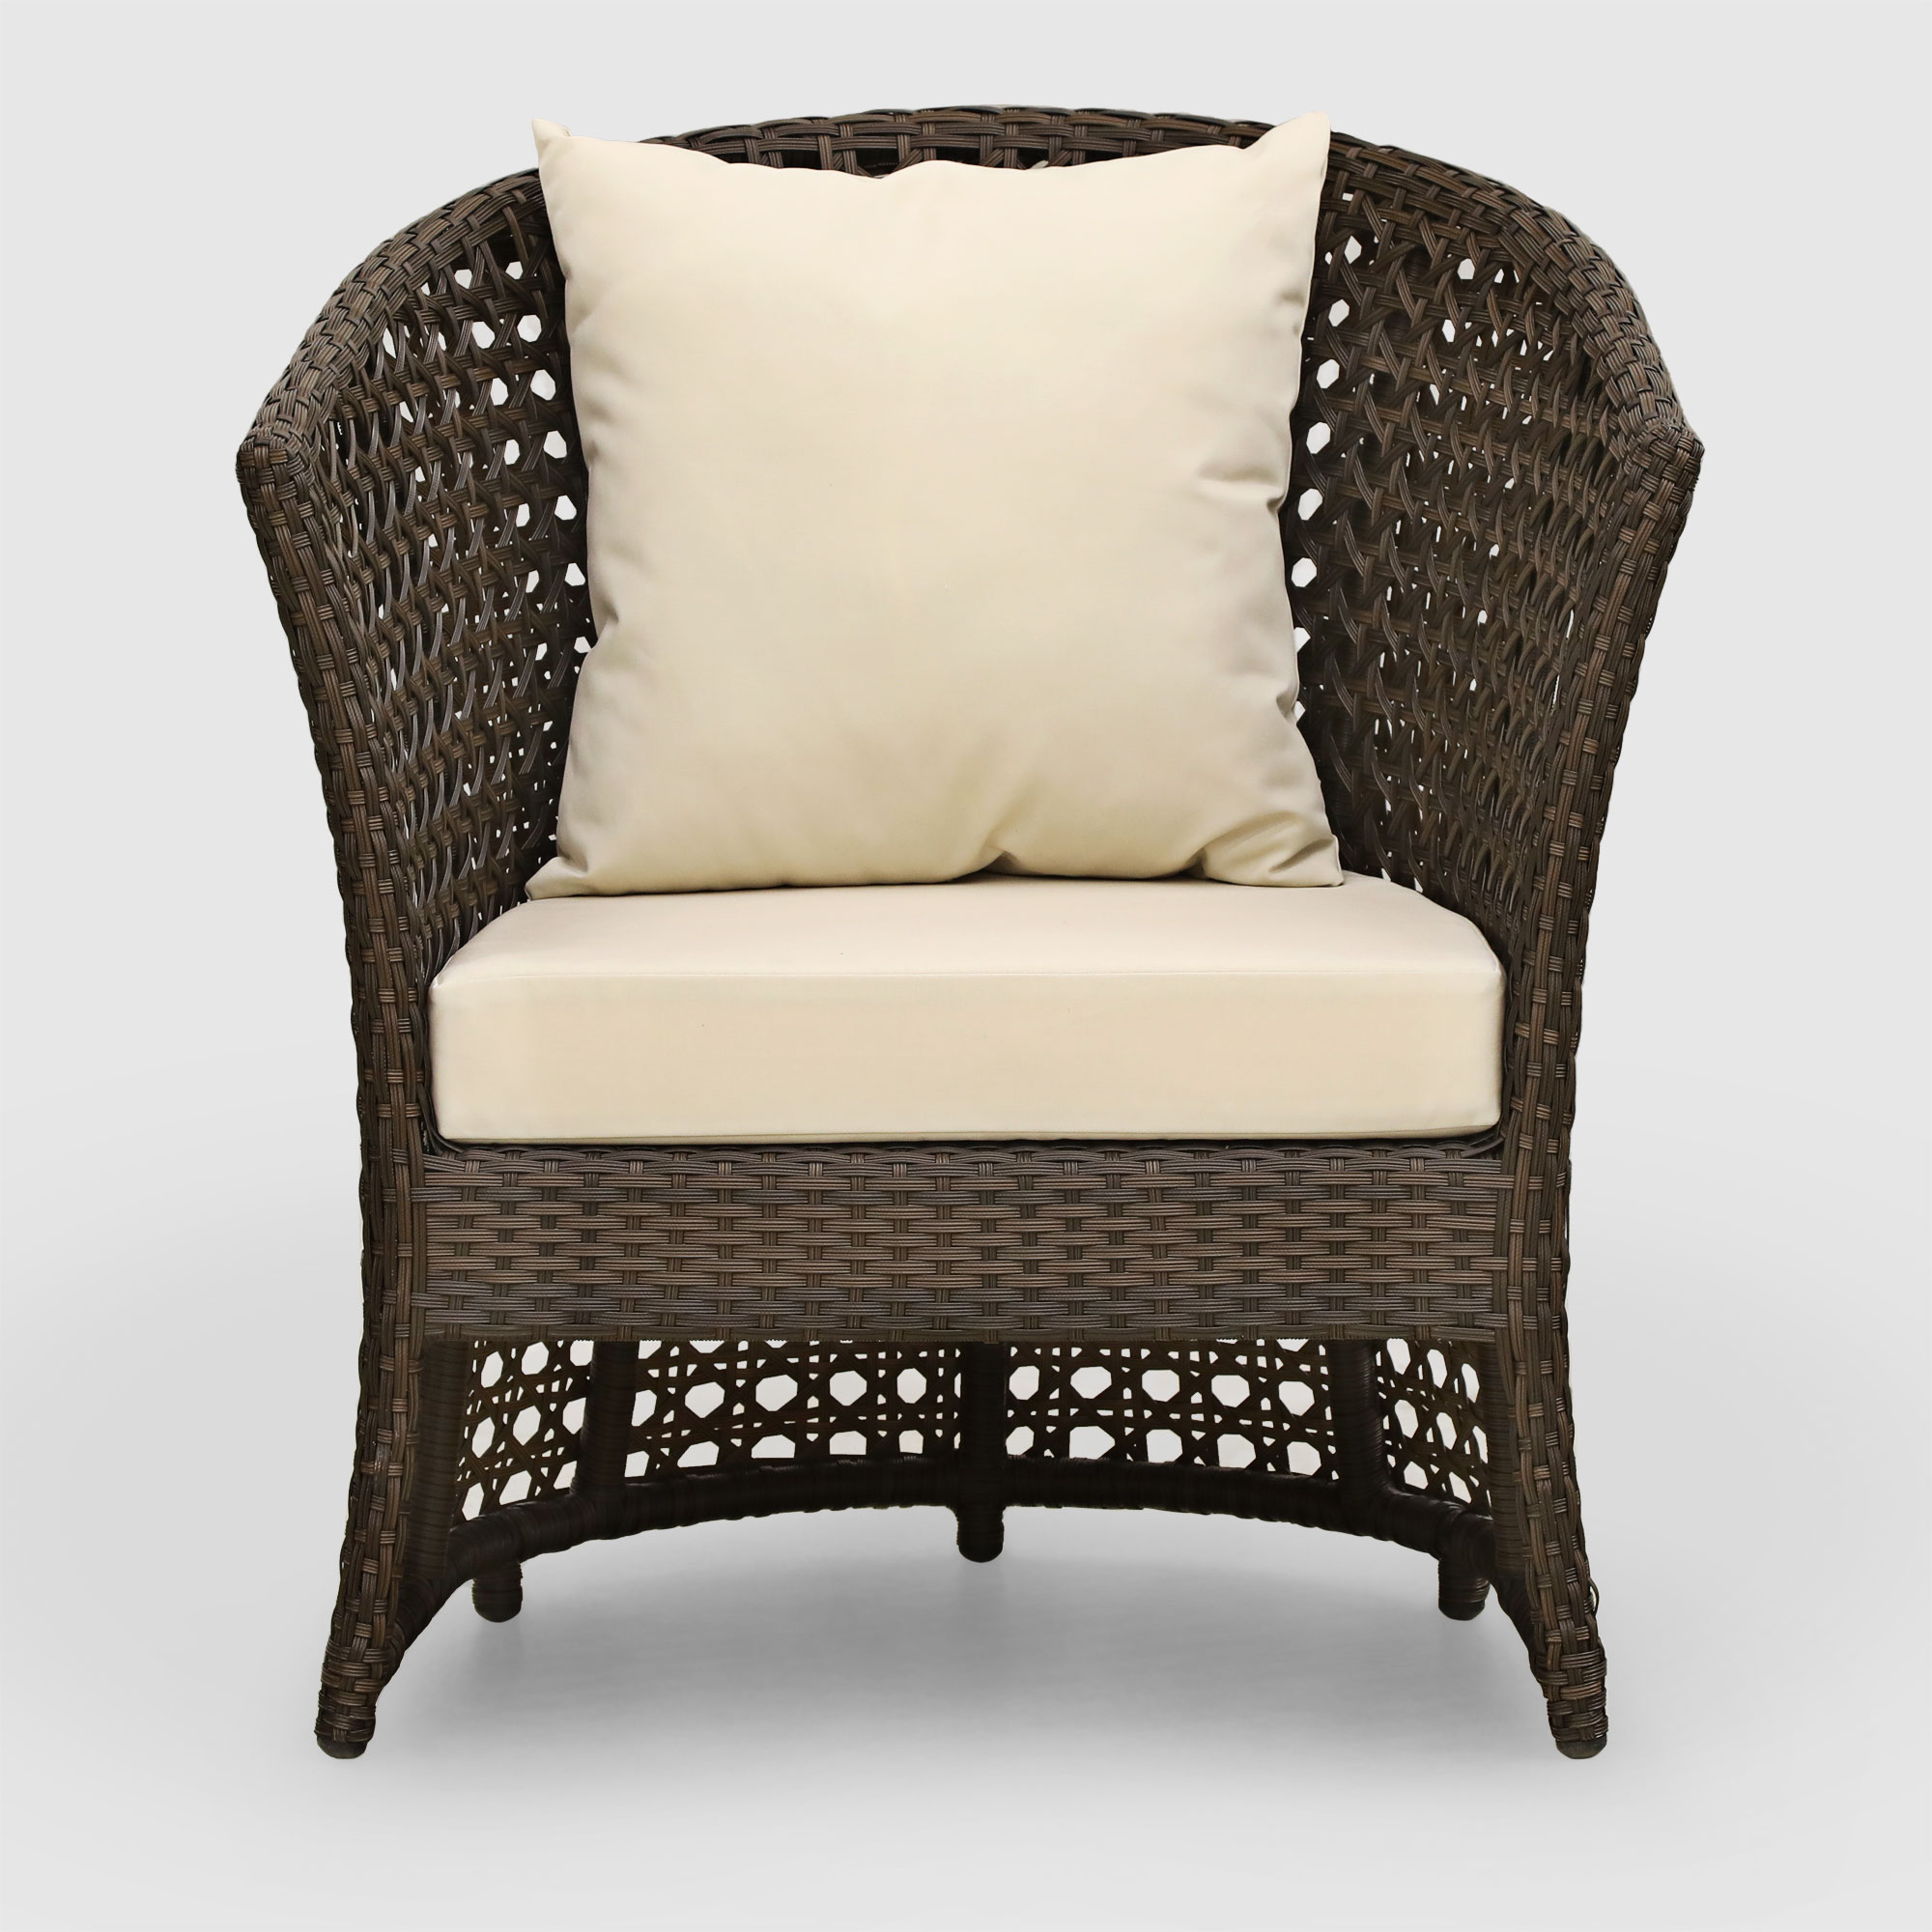 Комплект мебели Ns Rattan Linda коричневый с бежевым 4 предмета, цвет бежевый, размер 155х90х70 - фото 9